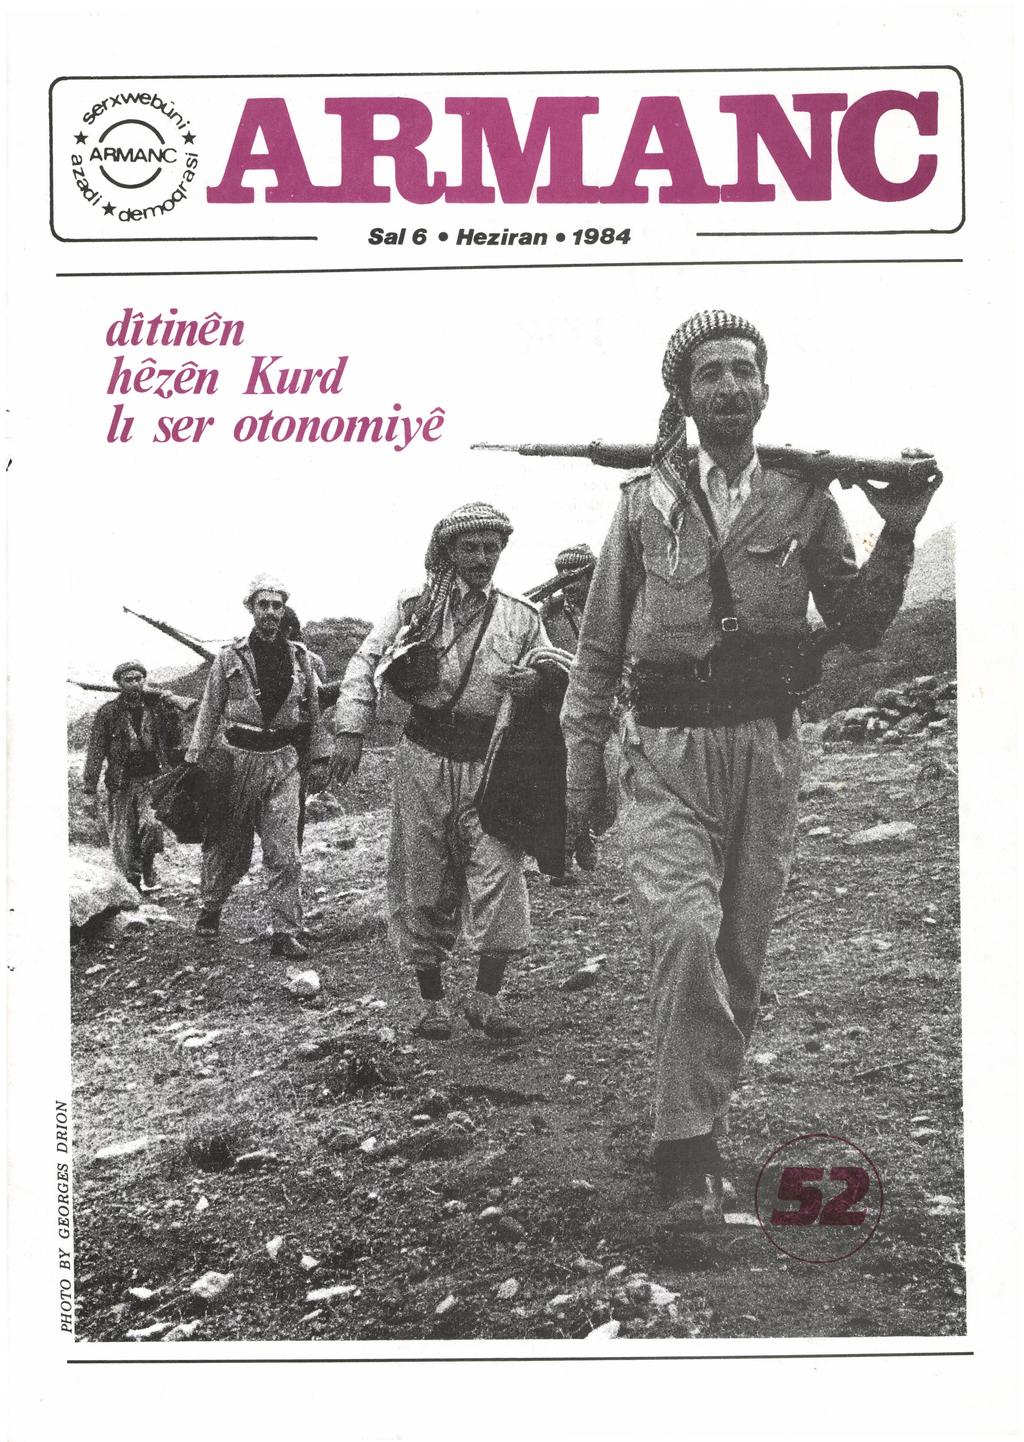 Sal 6 Heziran 1984 or g ditinen hezen Kurd